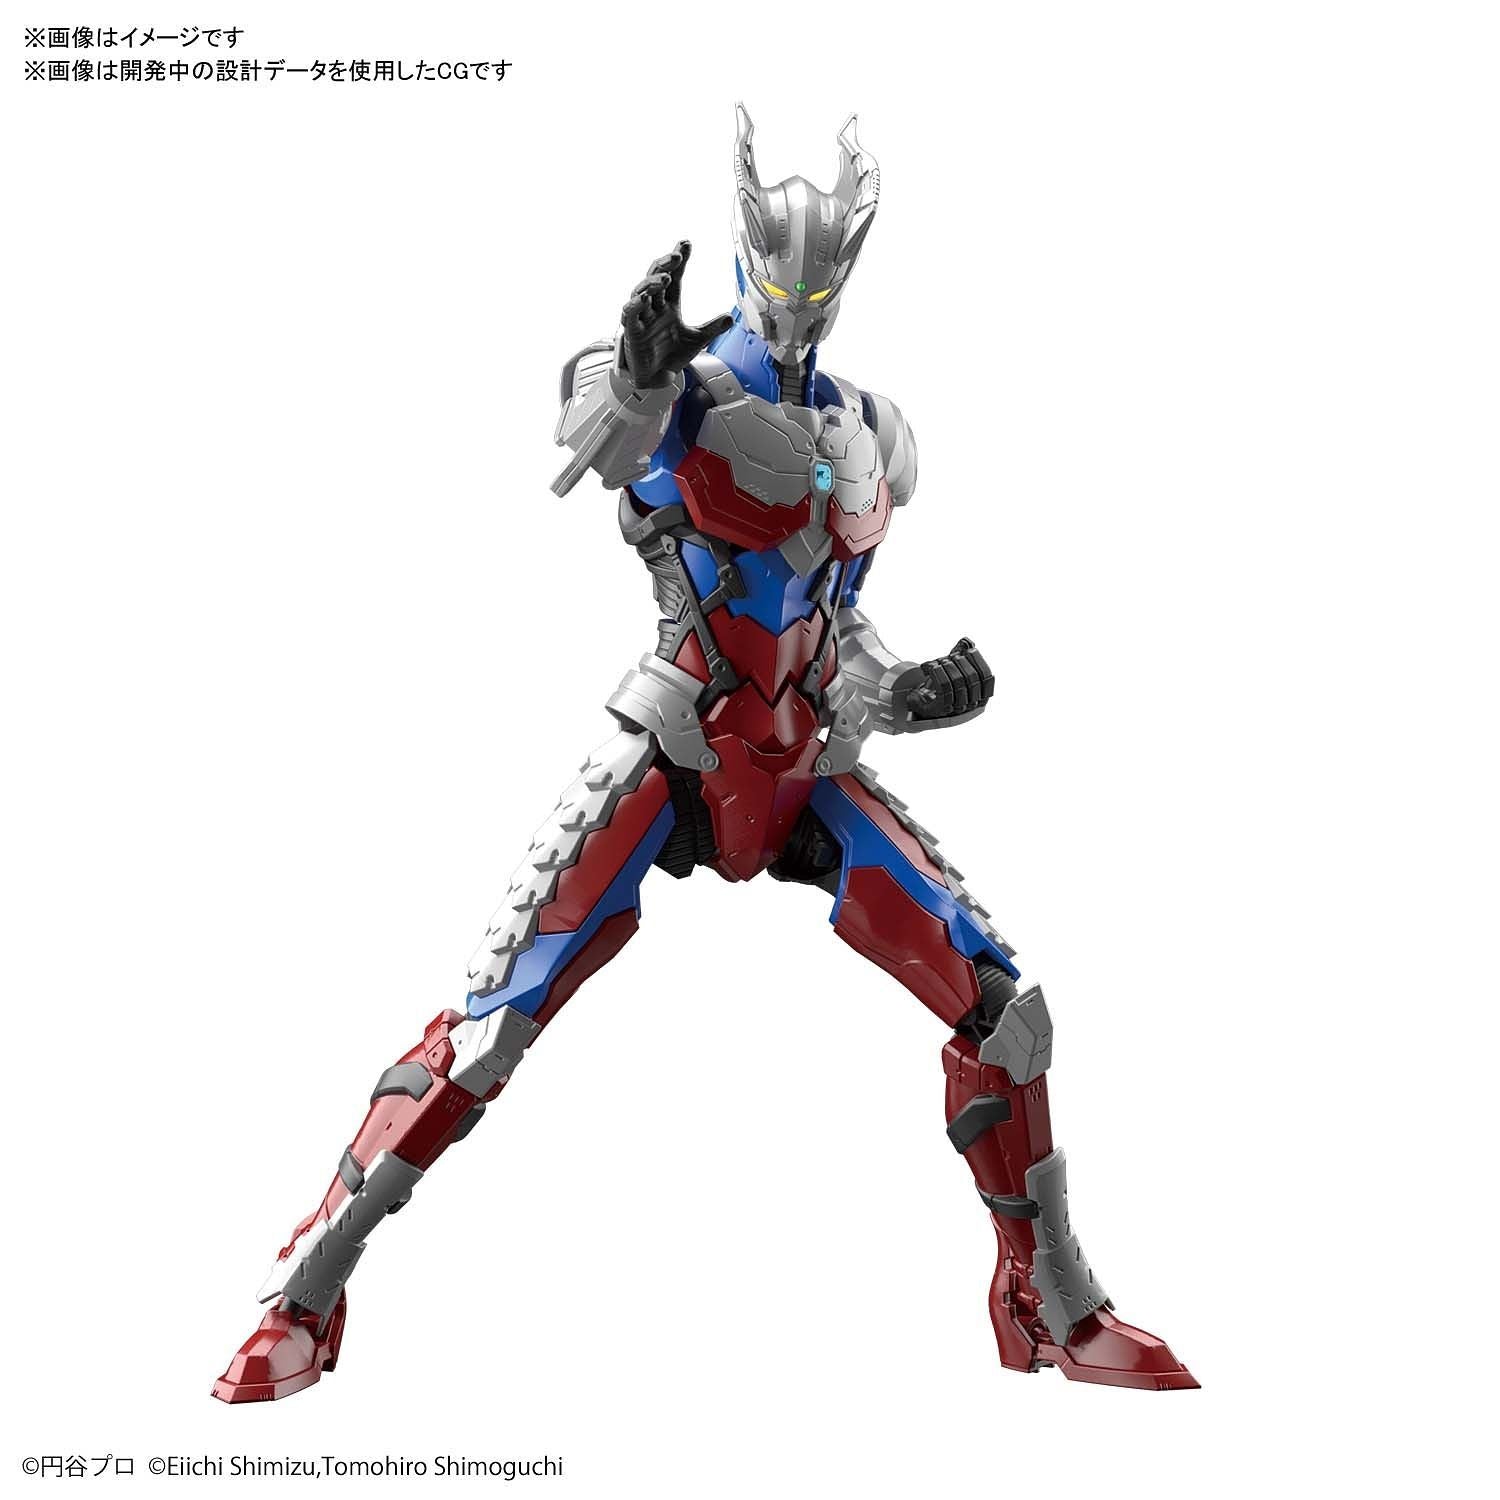 Figure-rise Standard - Ultraman Zero Suit [Action]